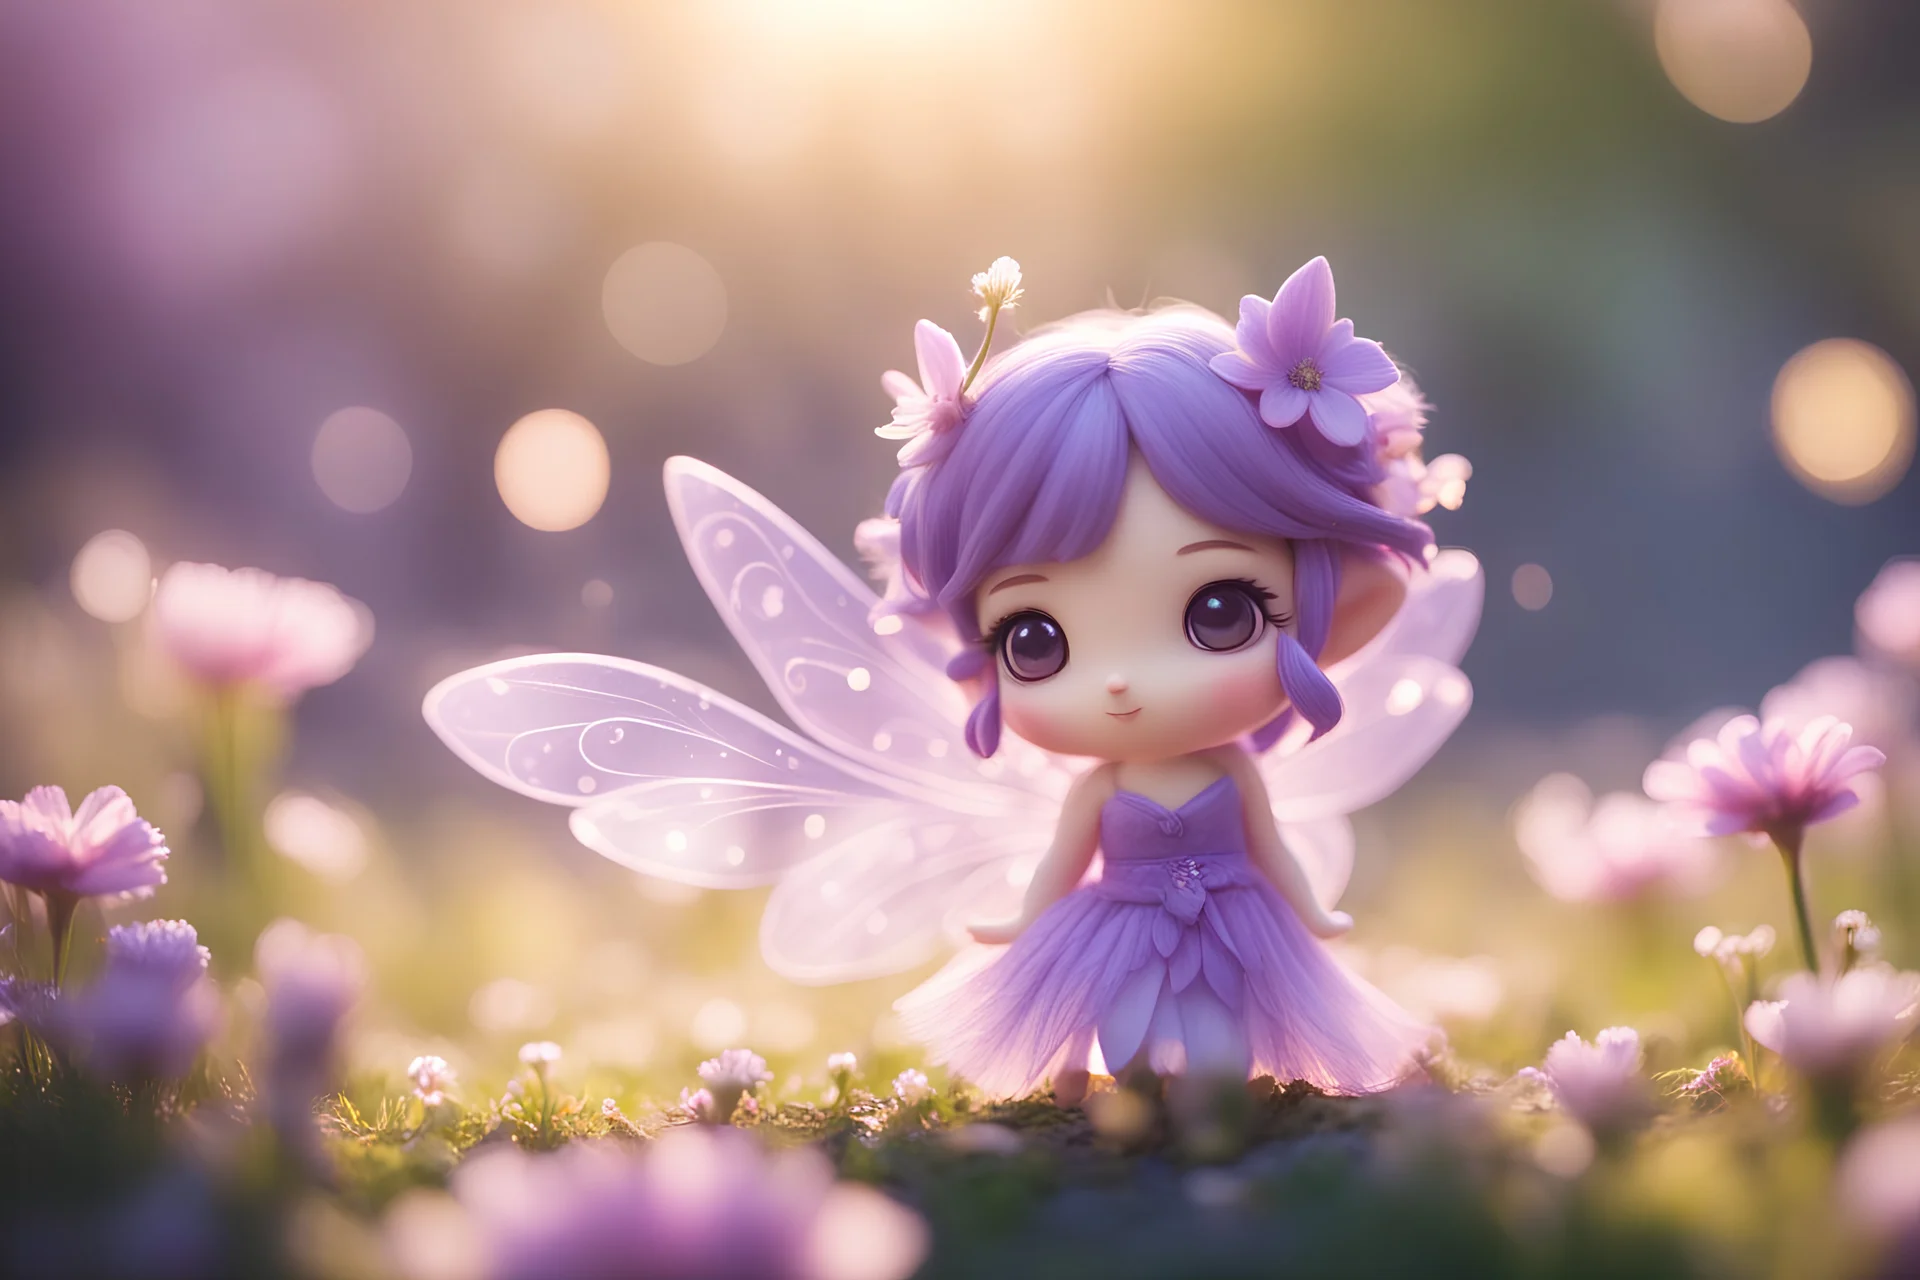 cute chibi purple fairy, flowers, in sunshine, ethereal, cinematic postprocessing, dof, bokeh